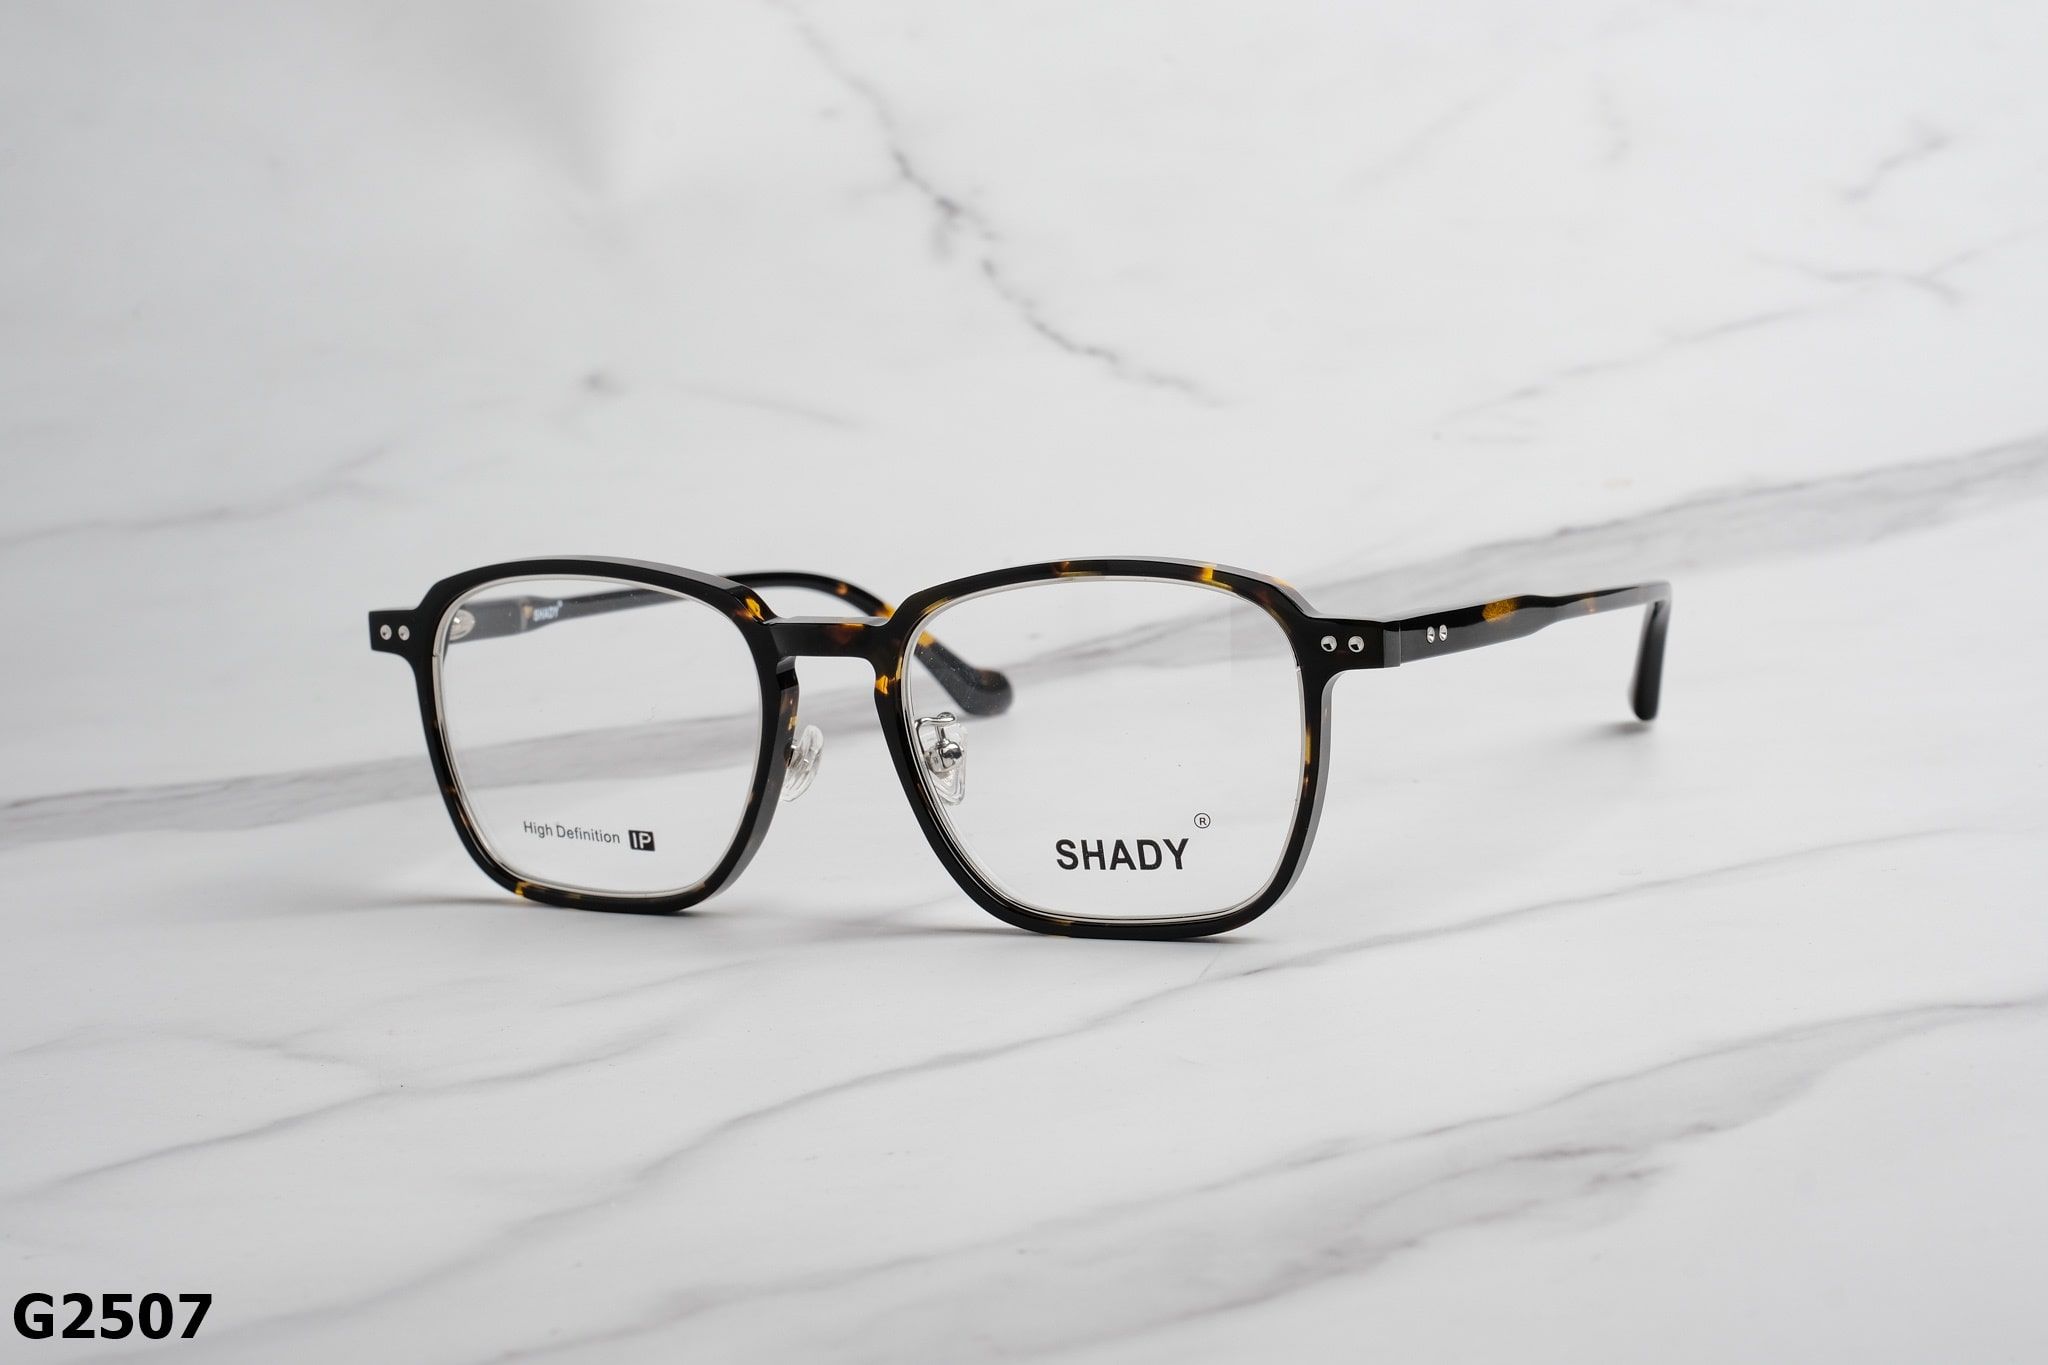  SHADY Eyewear - Glasses - G2507 